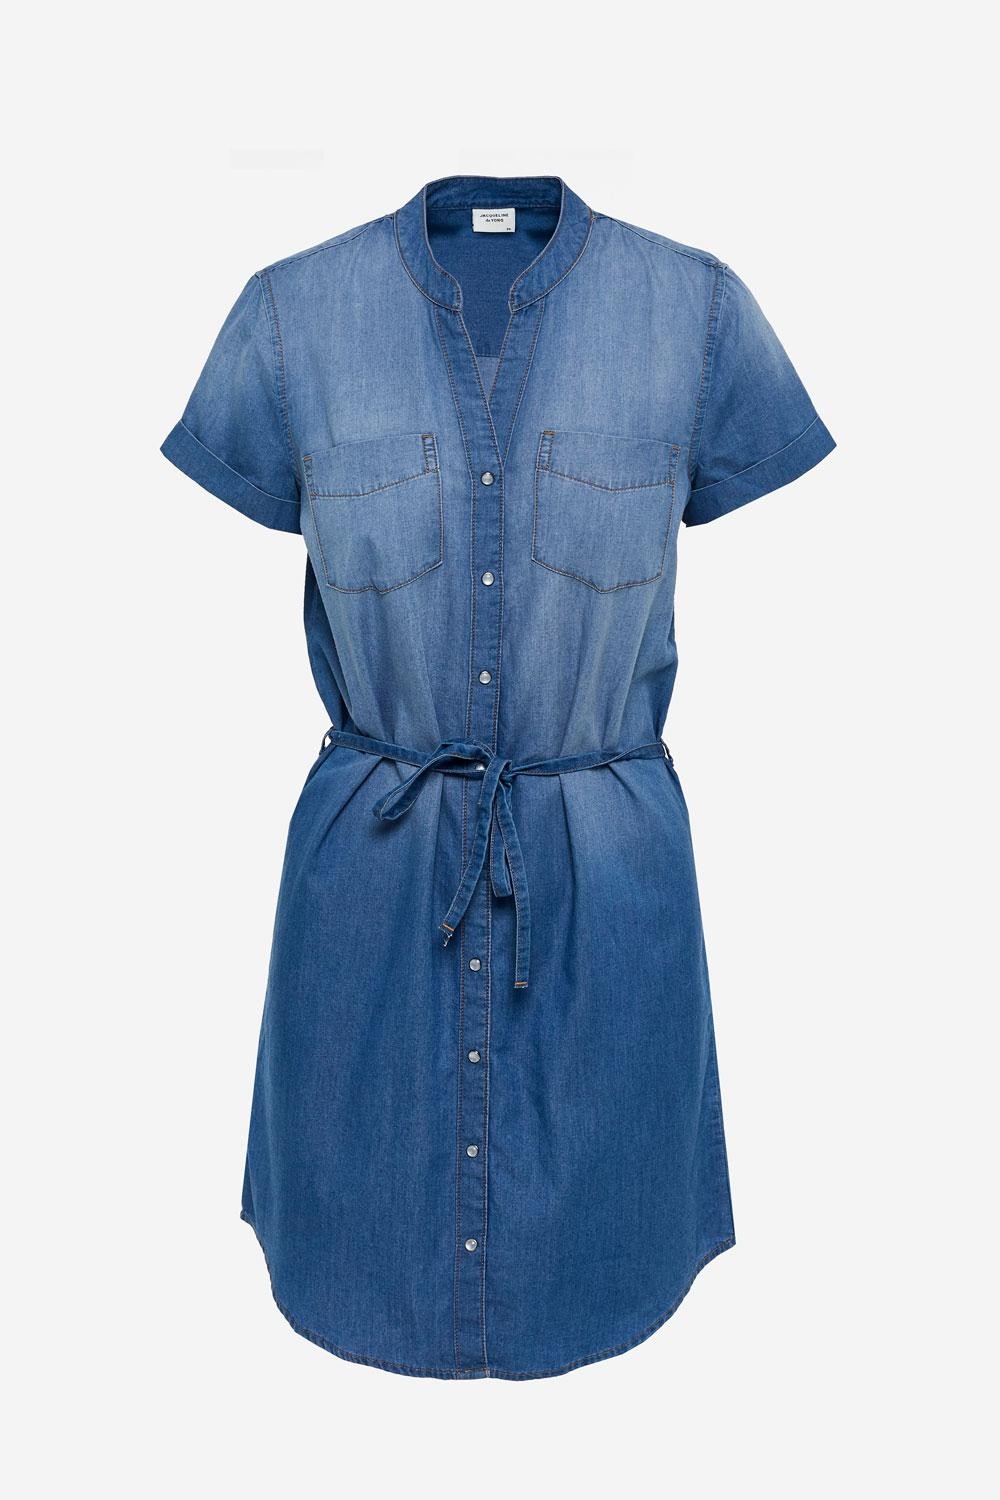 JDY Short Sleeve Denim Shirt Dress in Mid Wash Blue | iCLOTHING